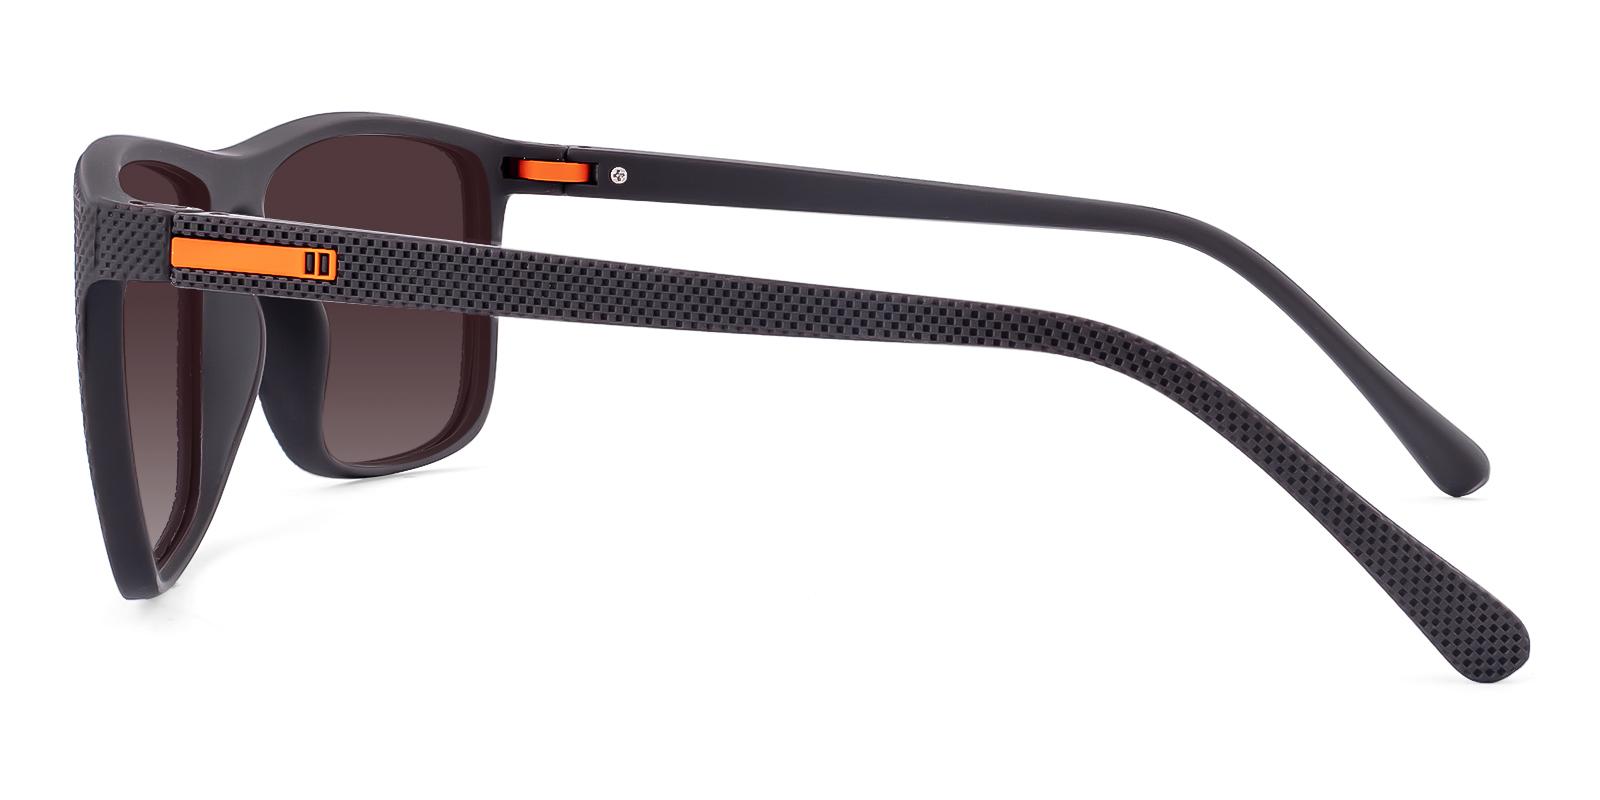 Naus Brown TR SpringHinges , Sunglasses , UniversalBridgeFit Frames from ABBE Glasses